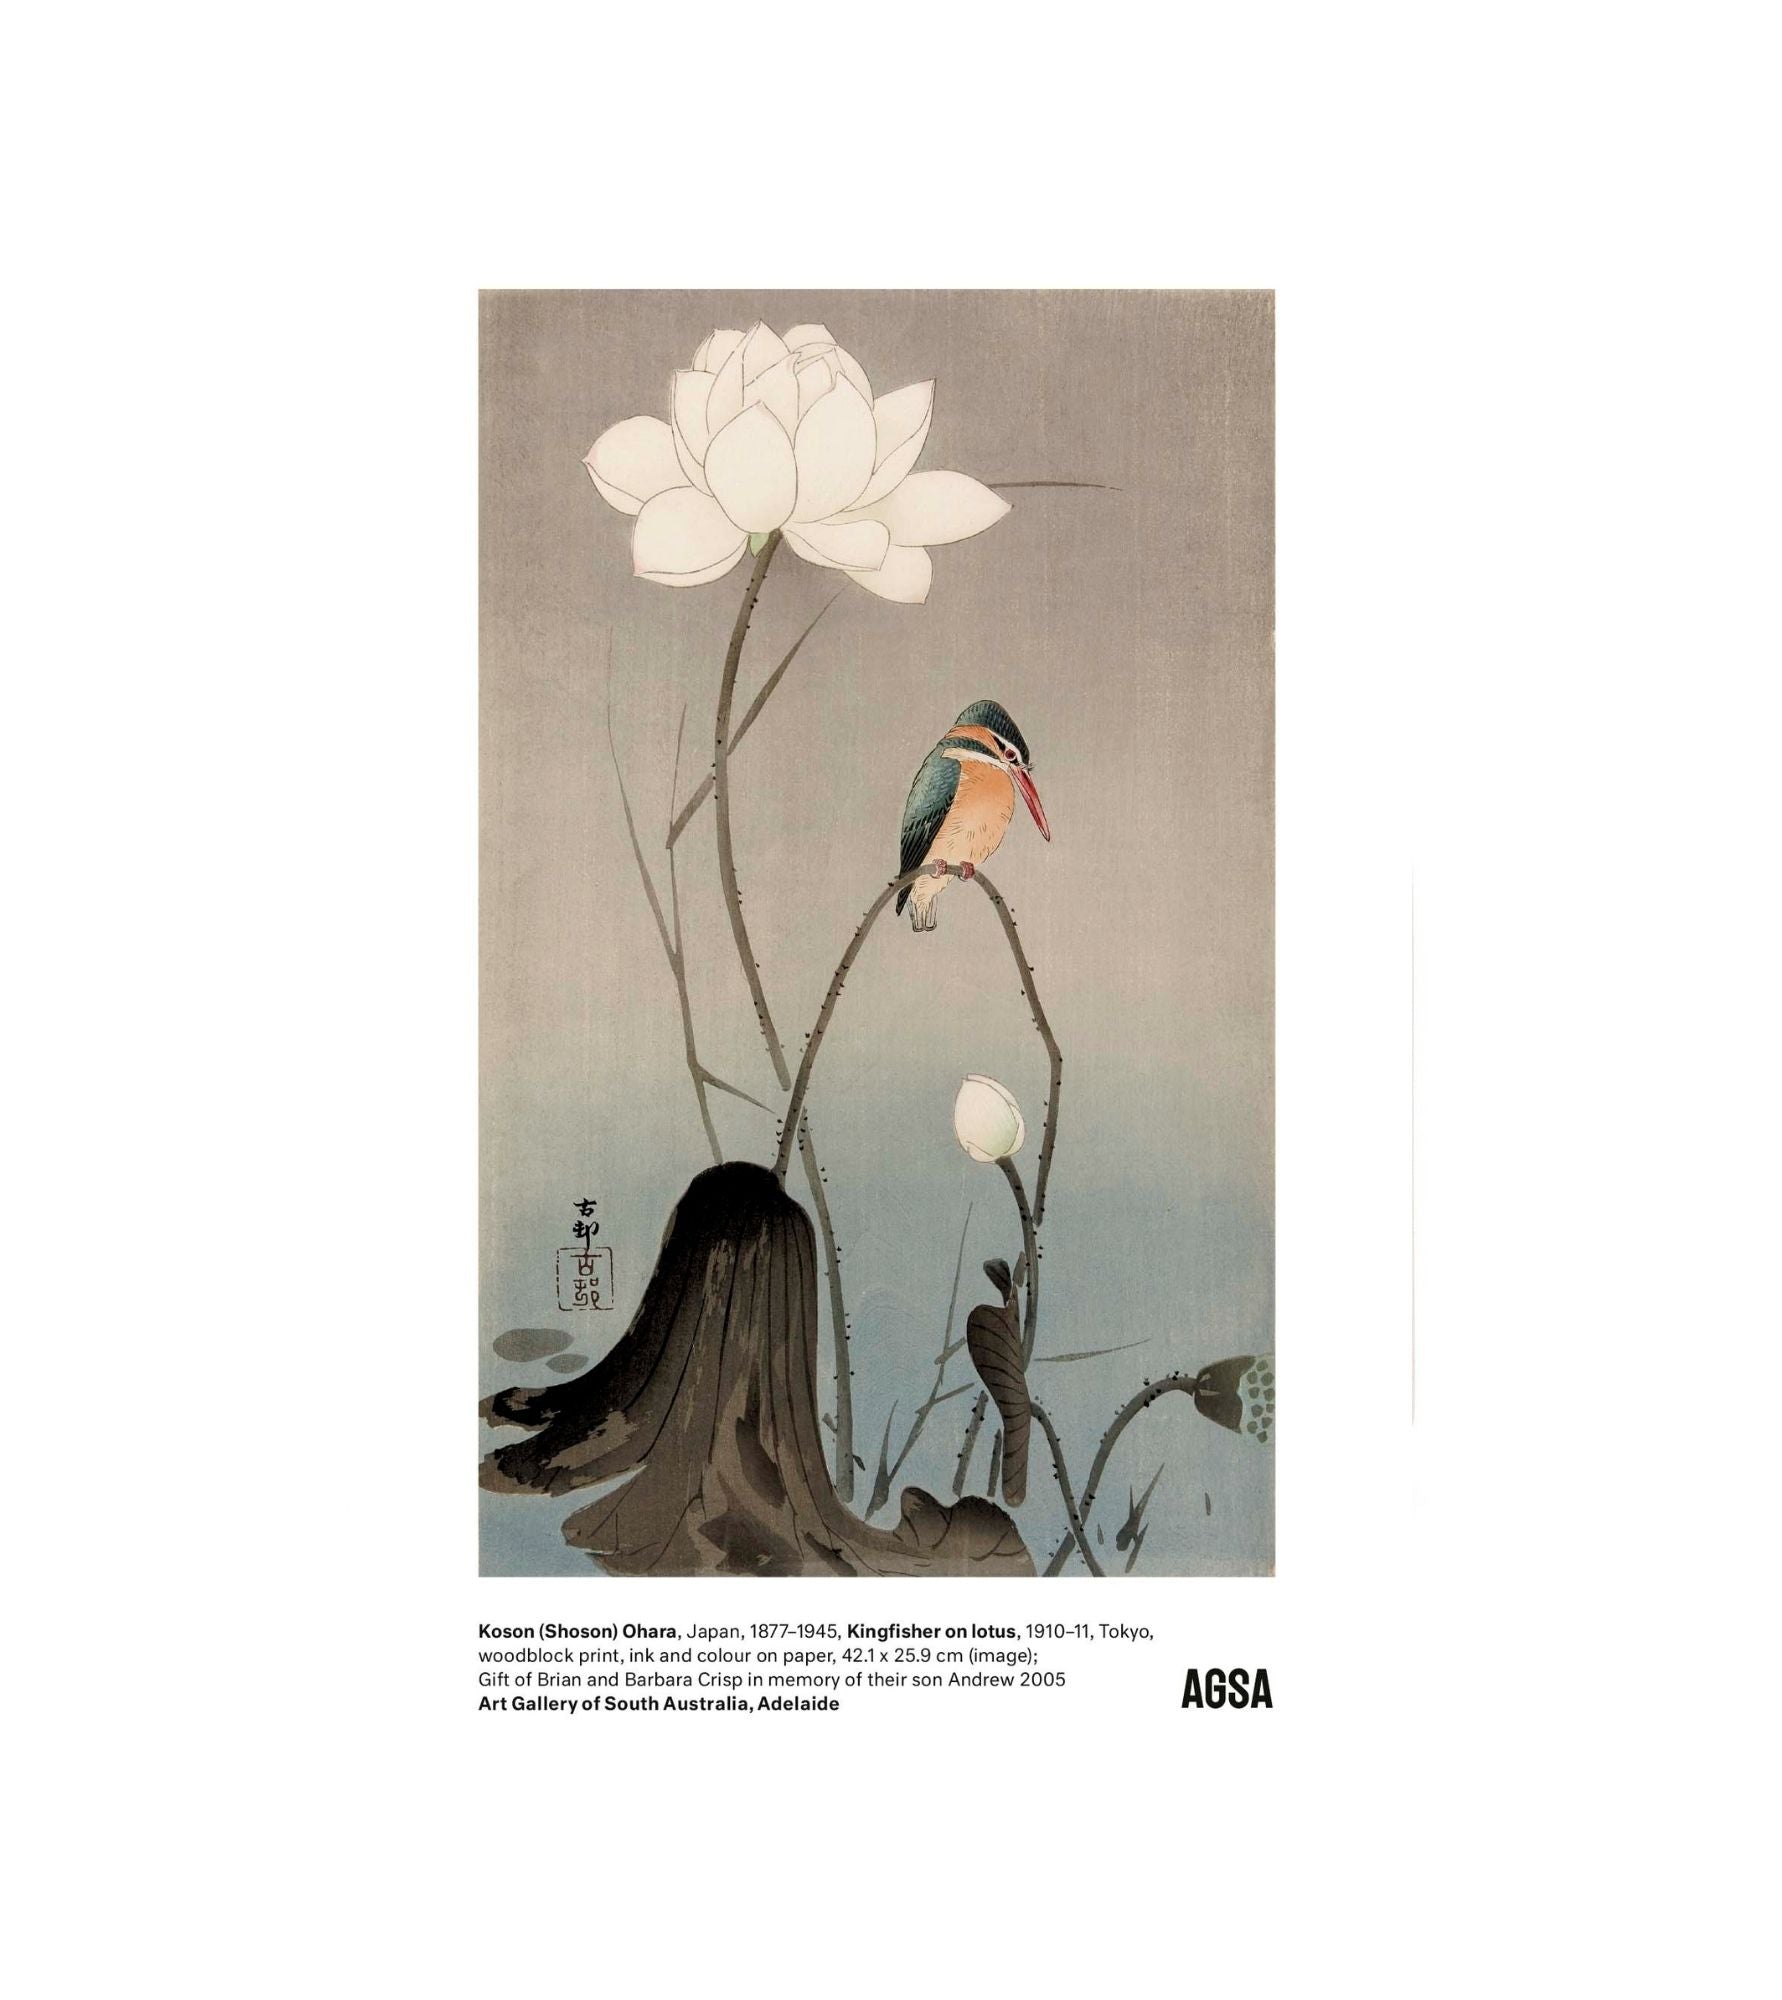 Kingfisher on lotus by Koson (Shoson) Ohara - A5 print